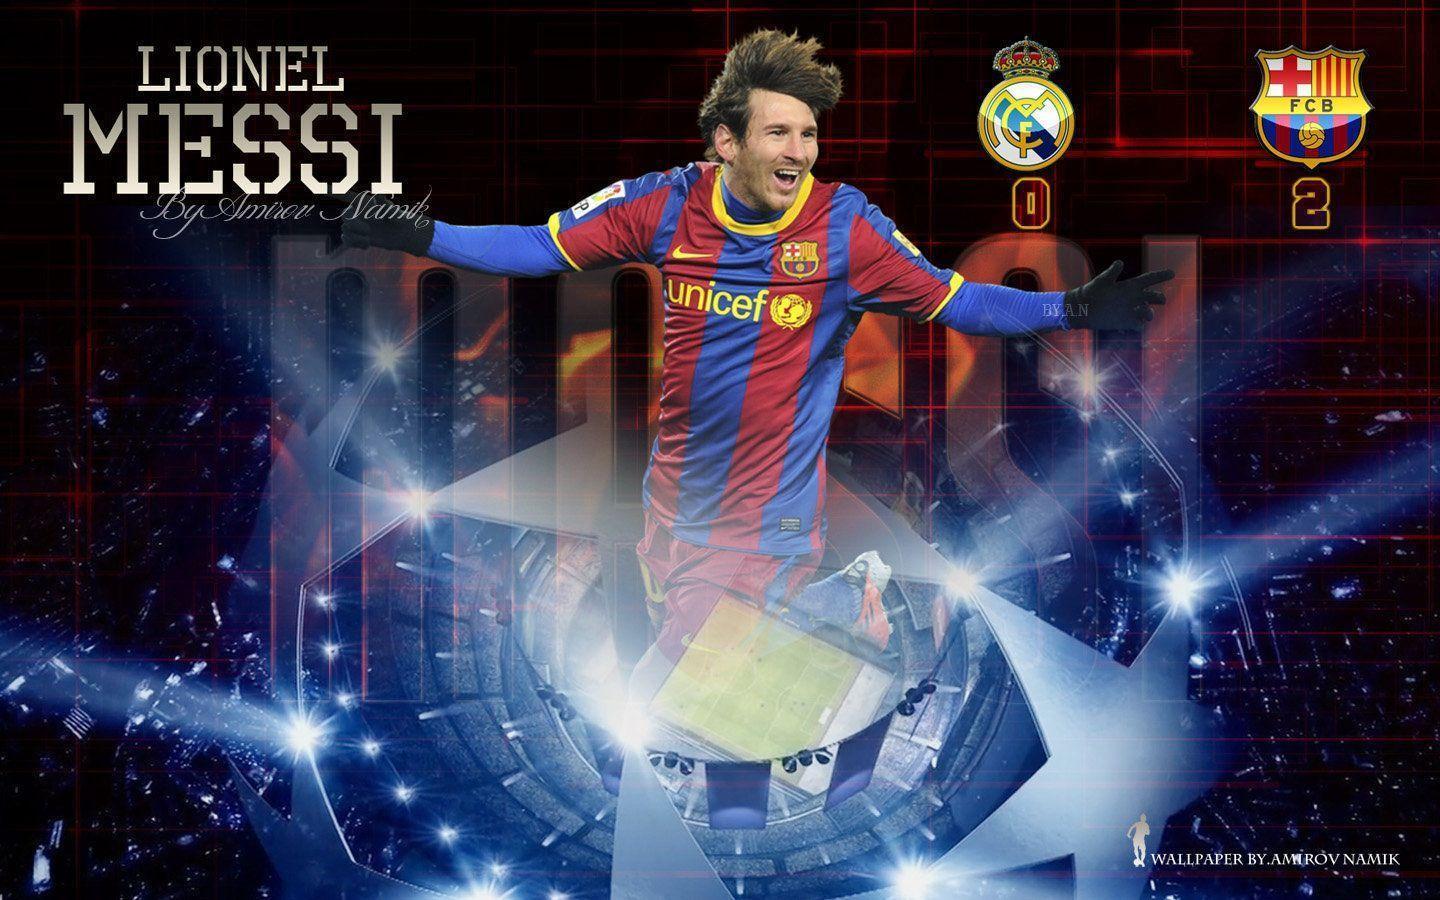 Lionel Messi Shooting Wallpaper. COOL WALLPAPER HD